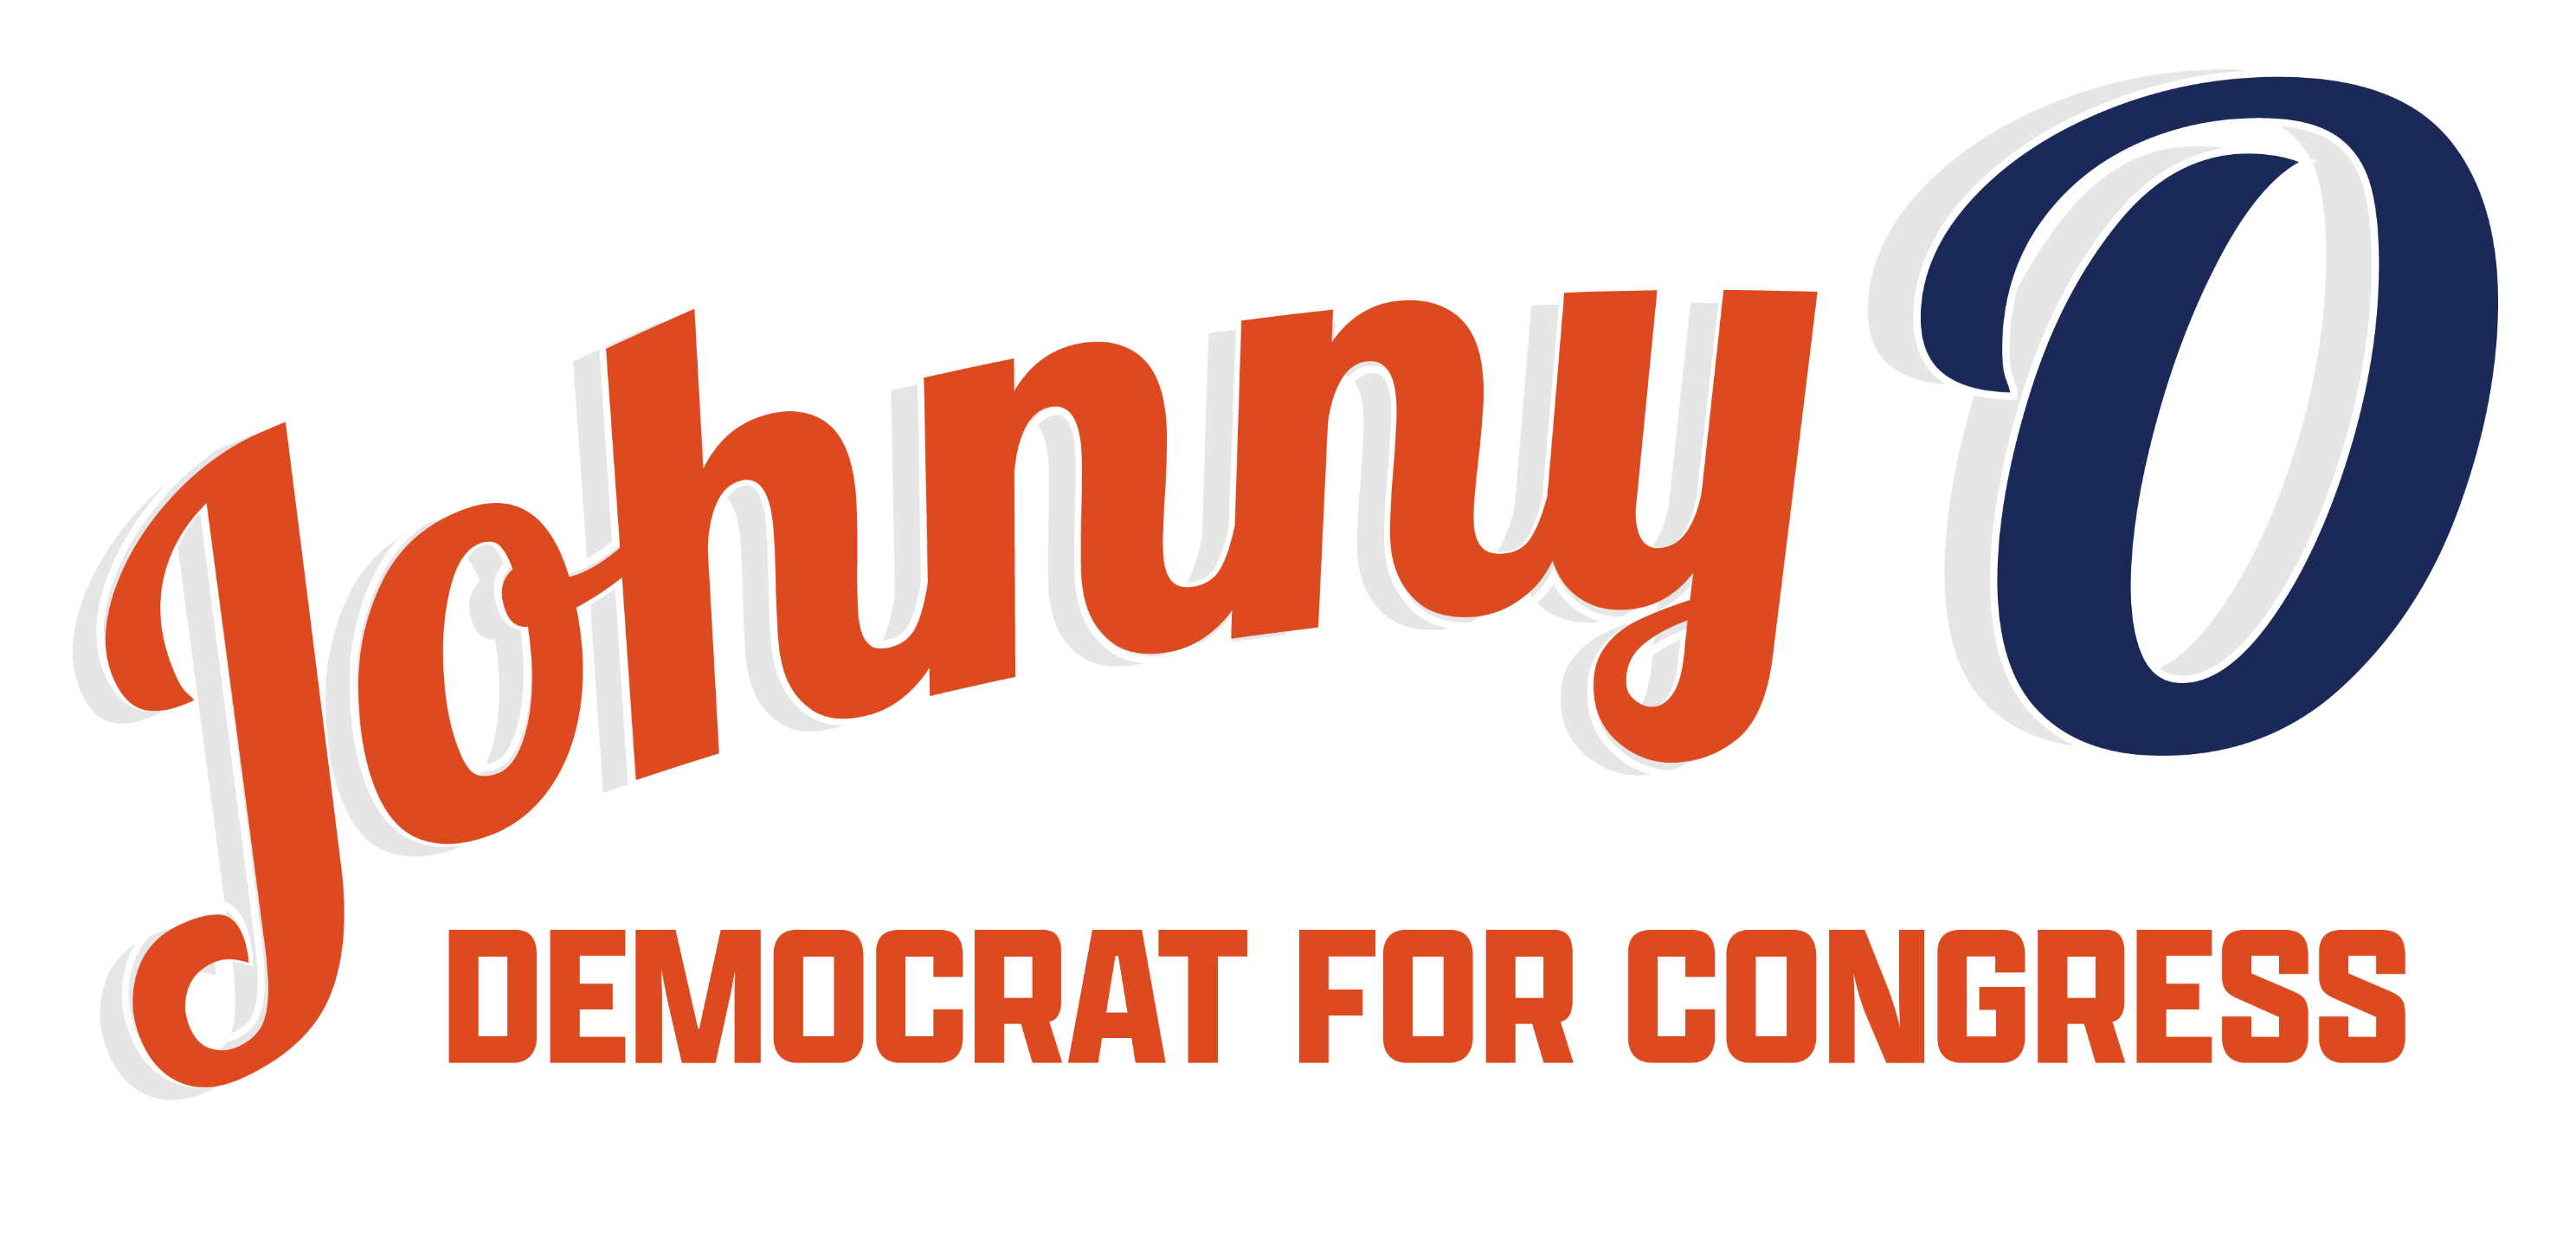 Johnny O's logo